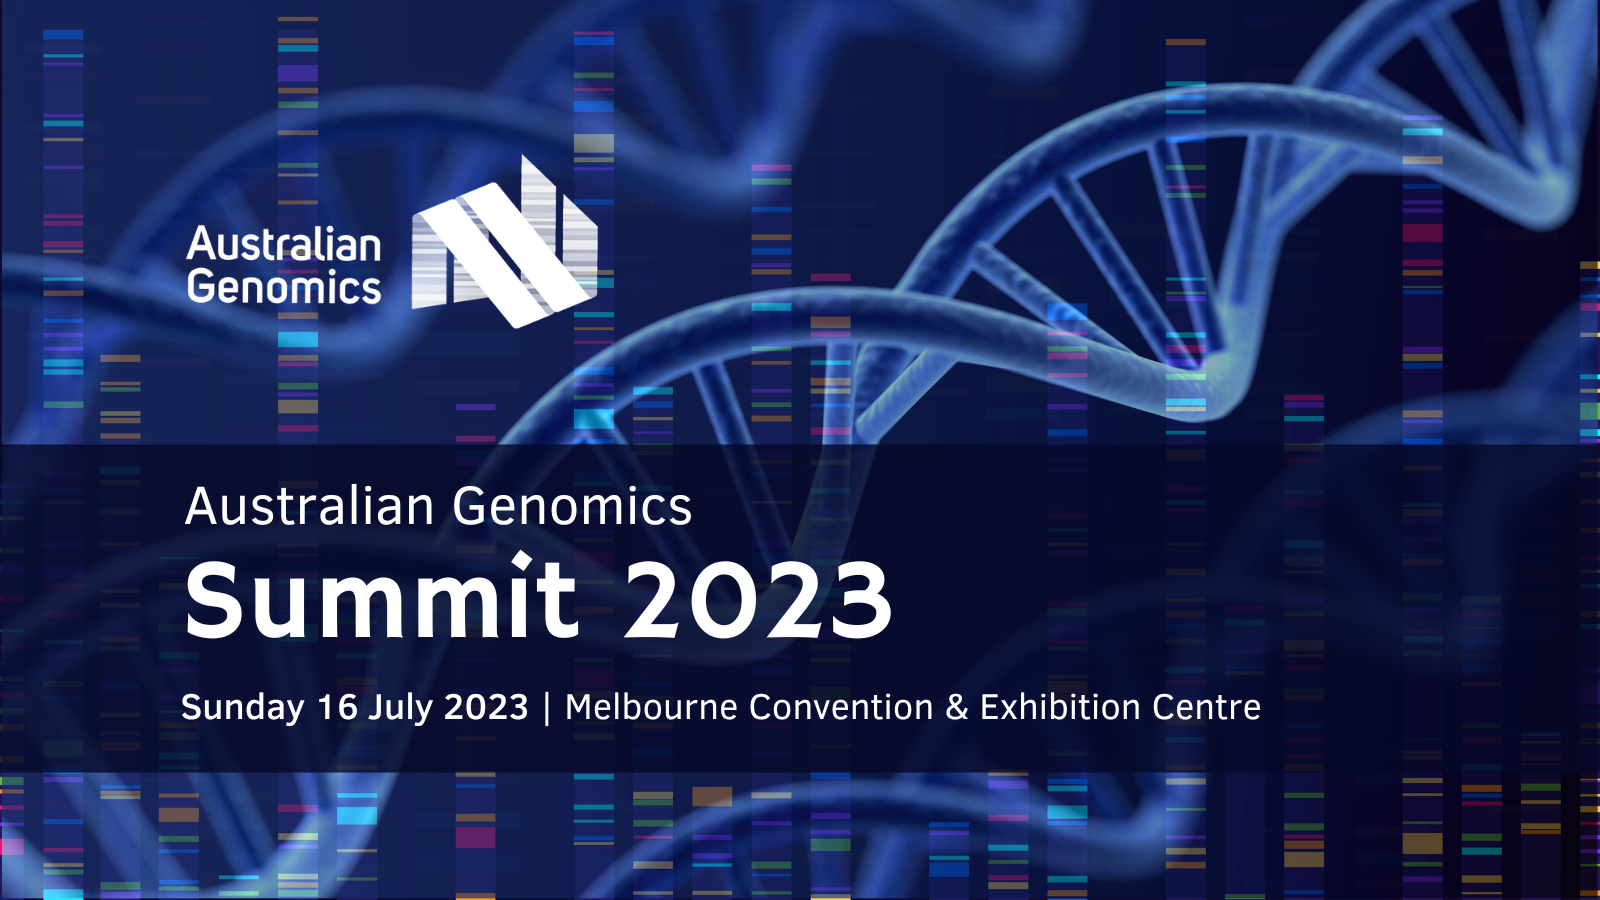 Australian Genomics Summit 2023 - Sunday 16 July, Melbourne Convention and Exhibition Centre